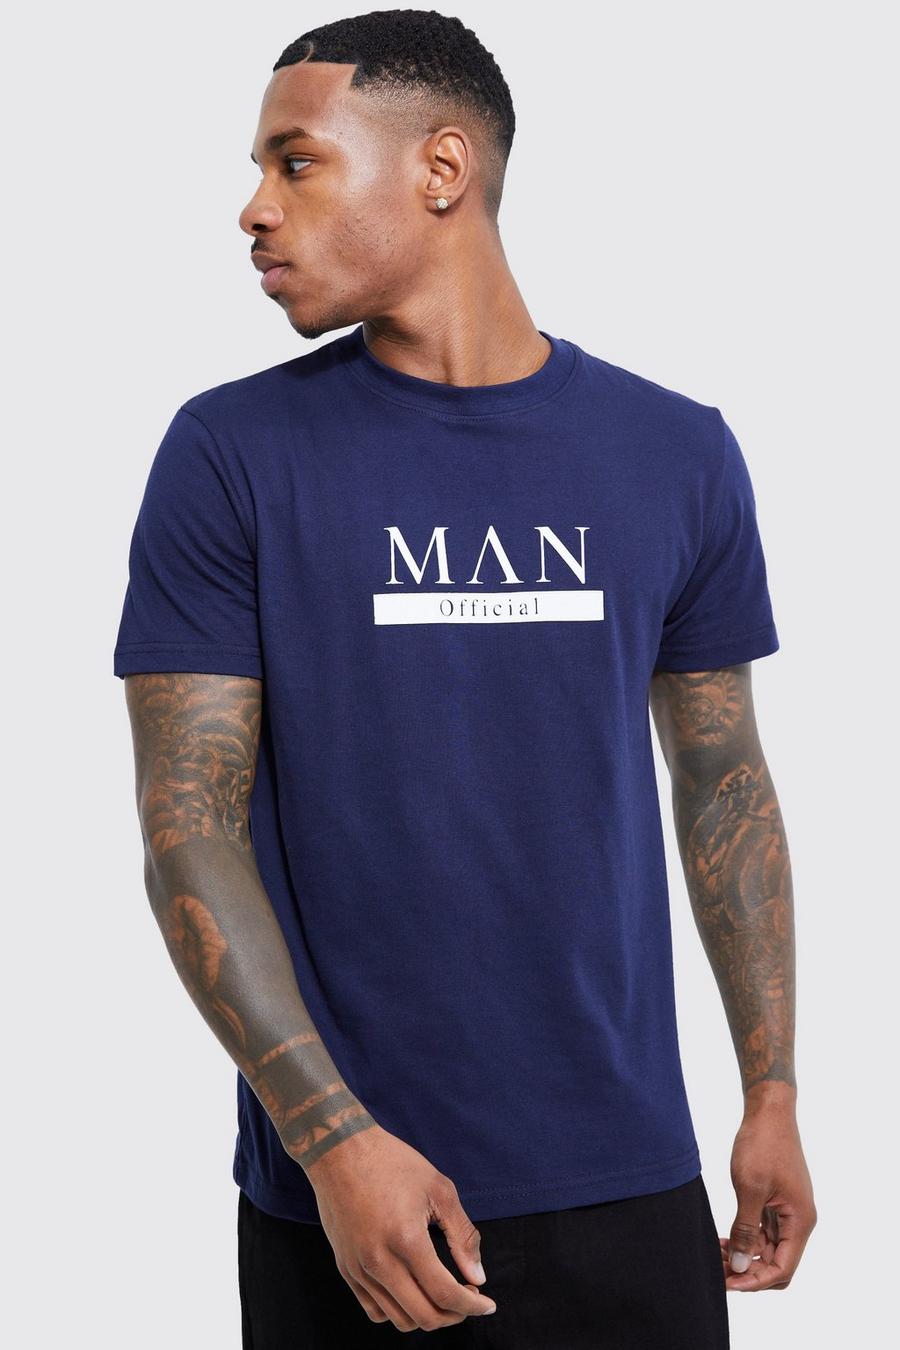 Man Gold Slim-Fit Official T-Shirt, Navy